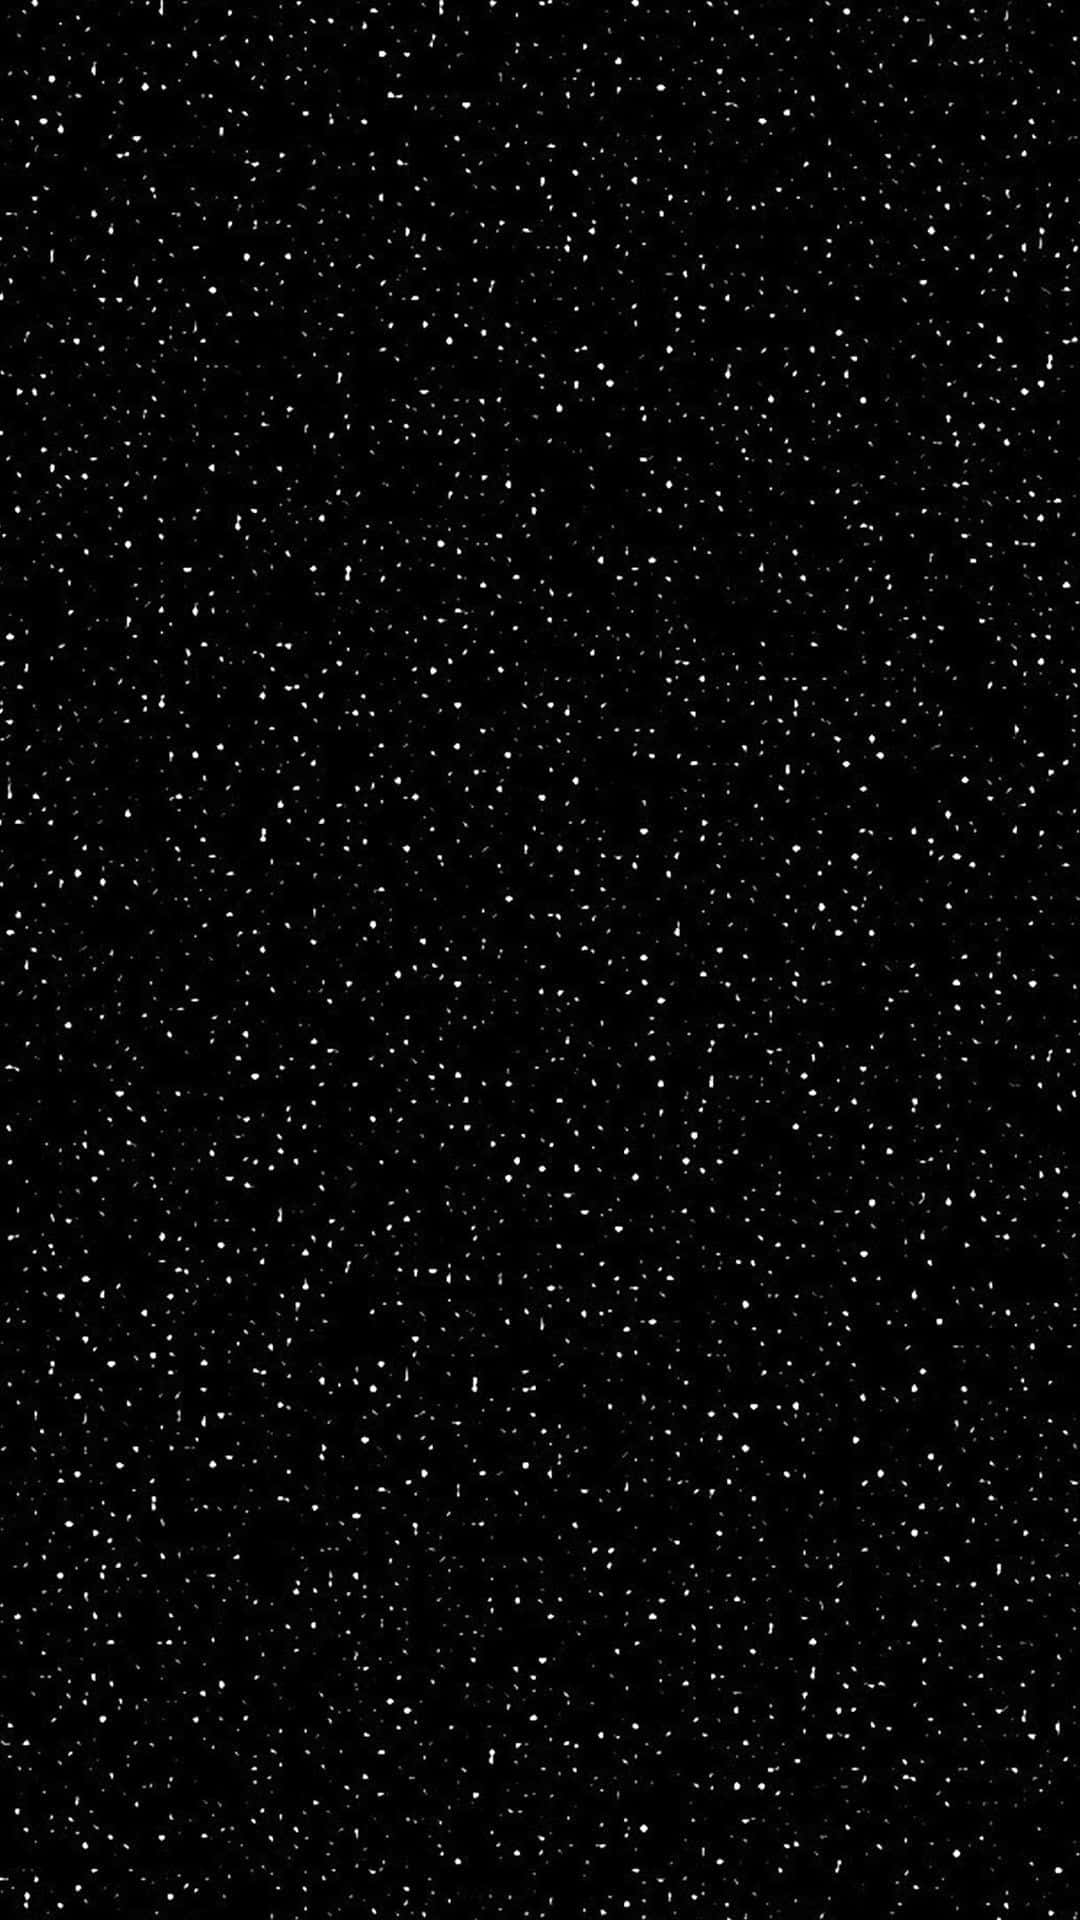 Mesmerizing Dark Sky with Stars and Milky Way Wallpaper